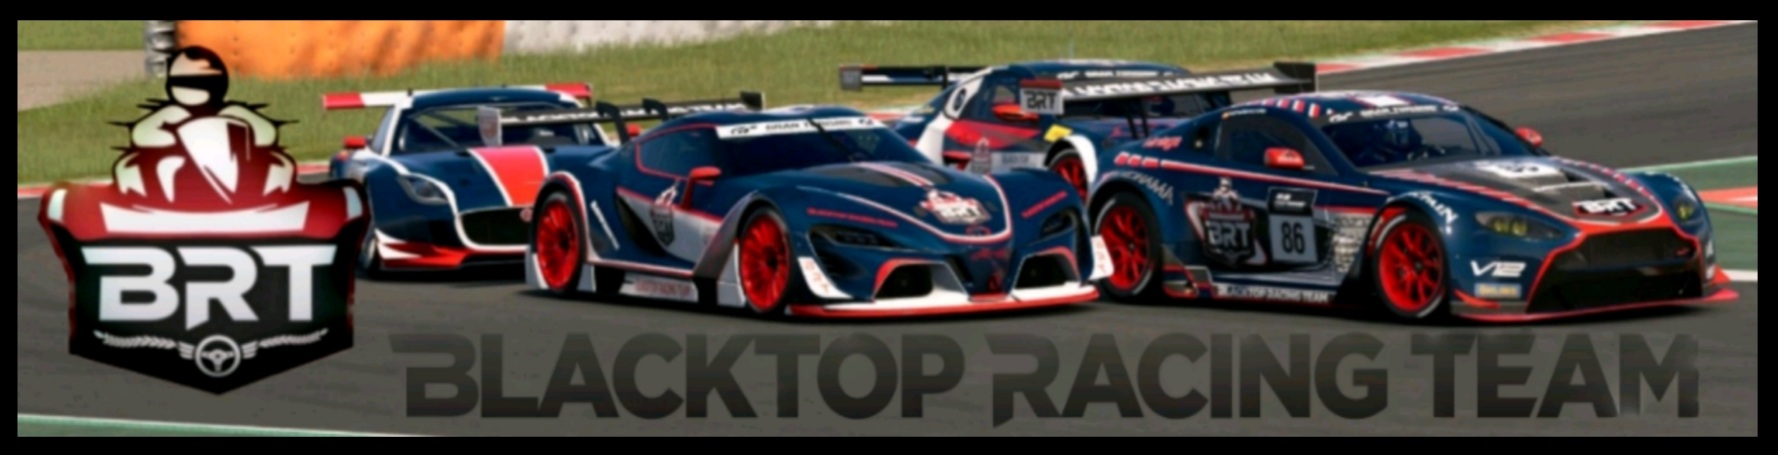 Blacktop Racing Team